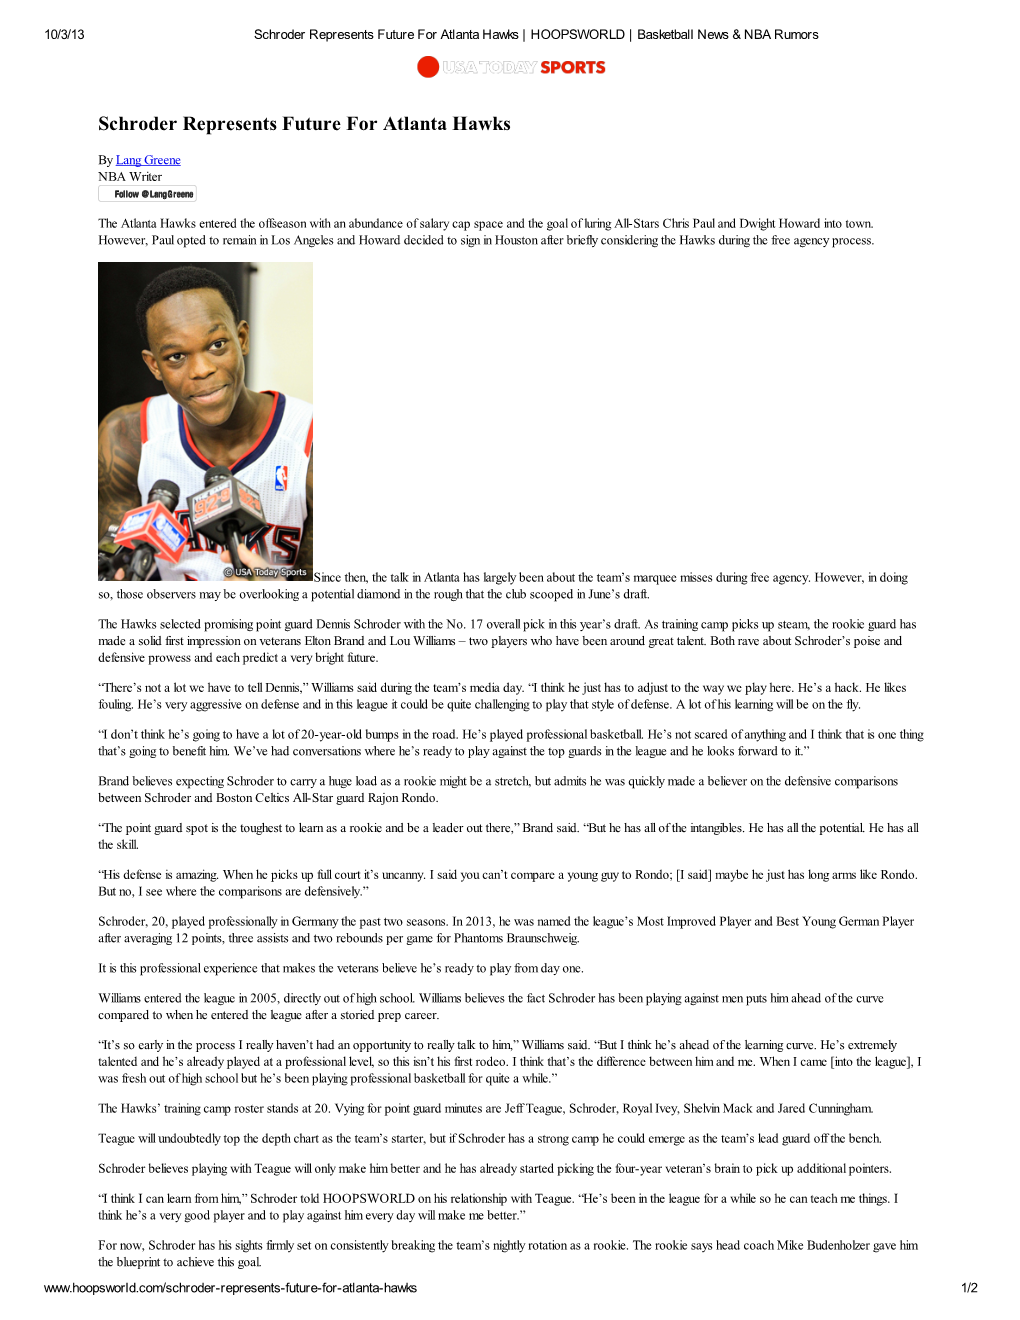 Schroder Represents Future for Atlanta Hawks | HOOPSWORLD | Basketball News & NBA Rumors